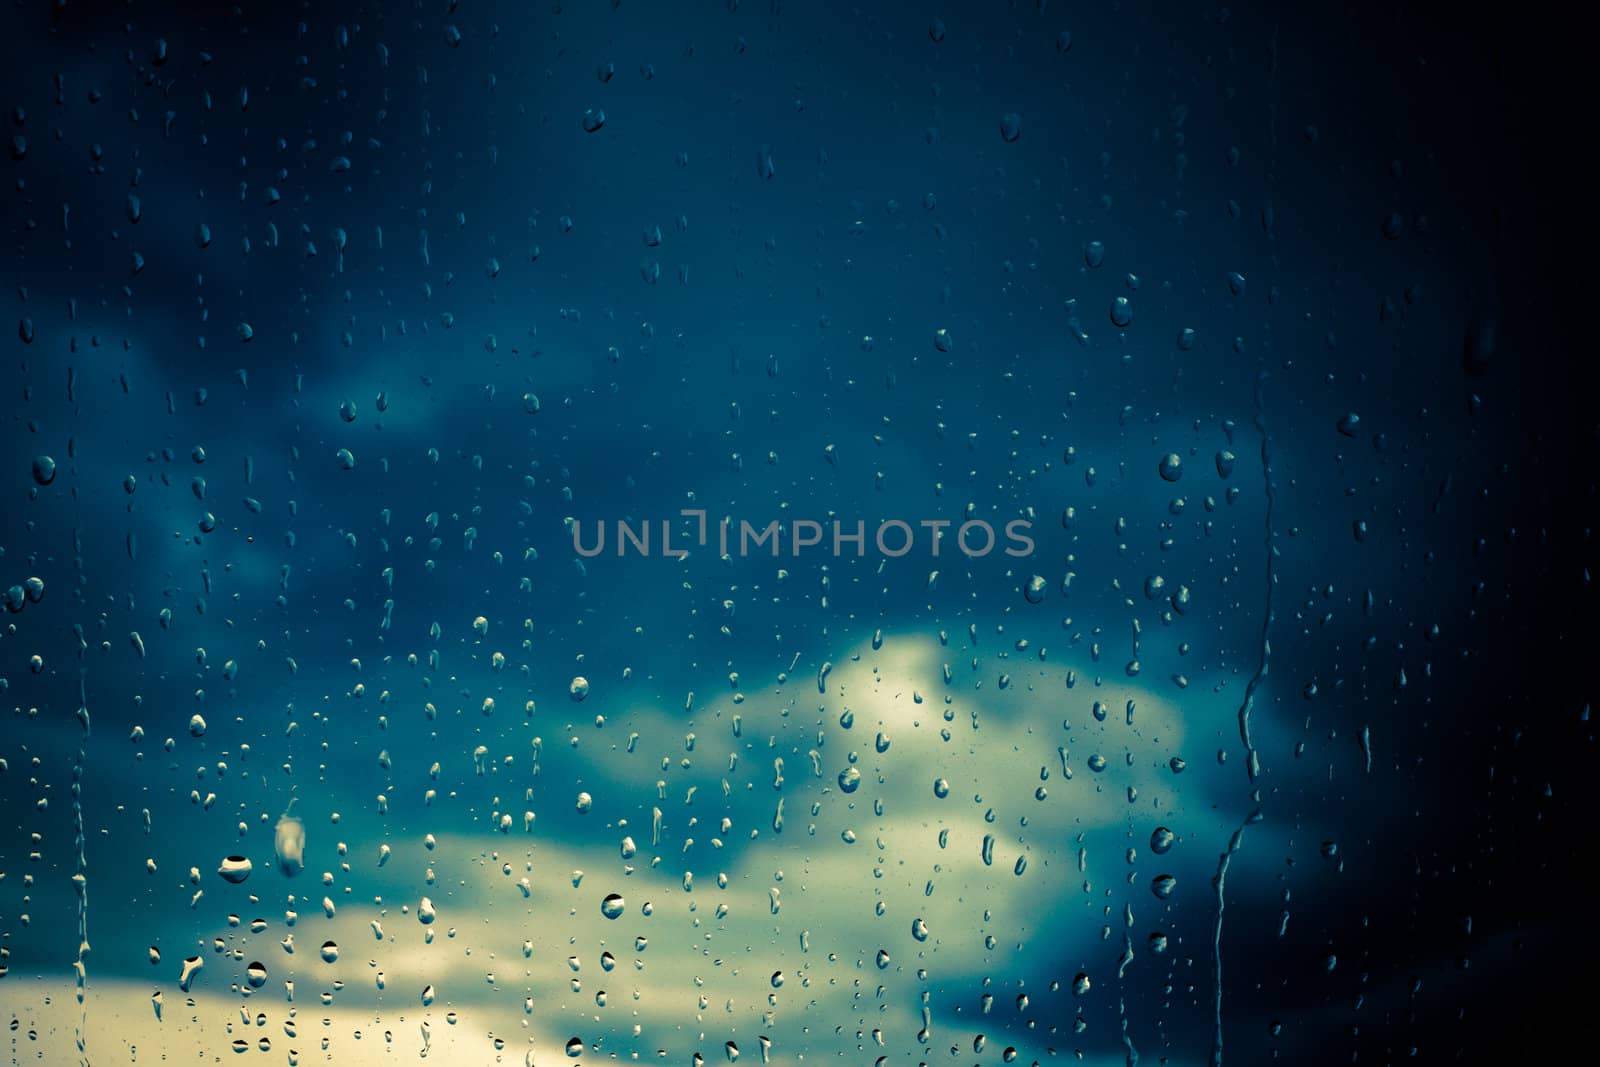 Rain drops on a window, close-up